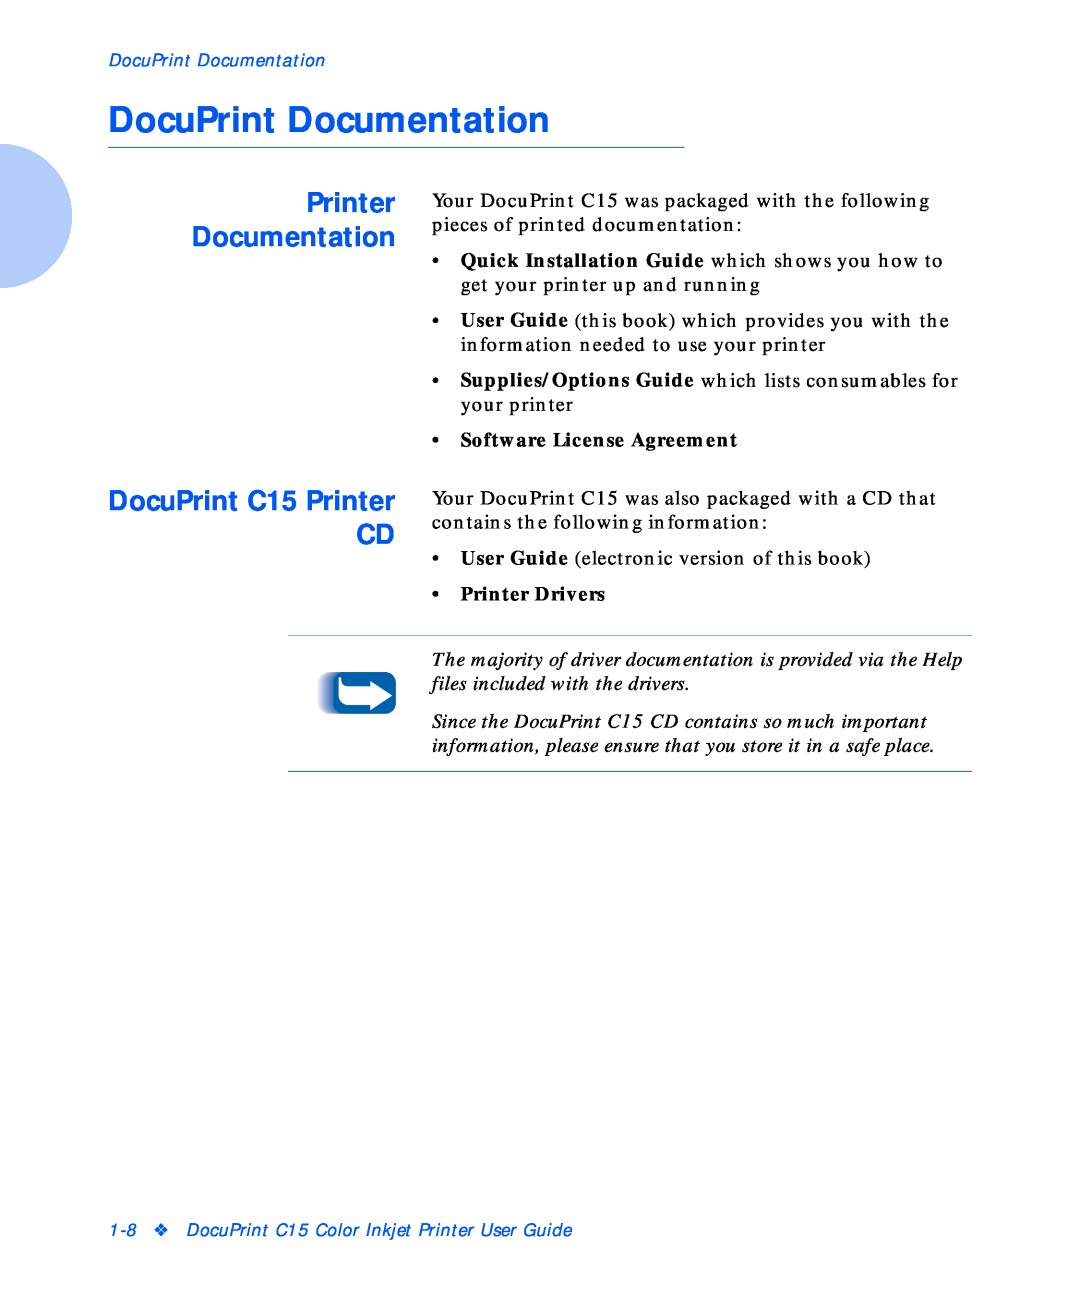 Xerox manual DocuPrint Documentation, Printer Documentation DocuPrint C15 Printer CD, Software License Agreement 